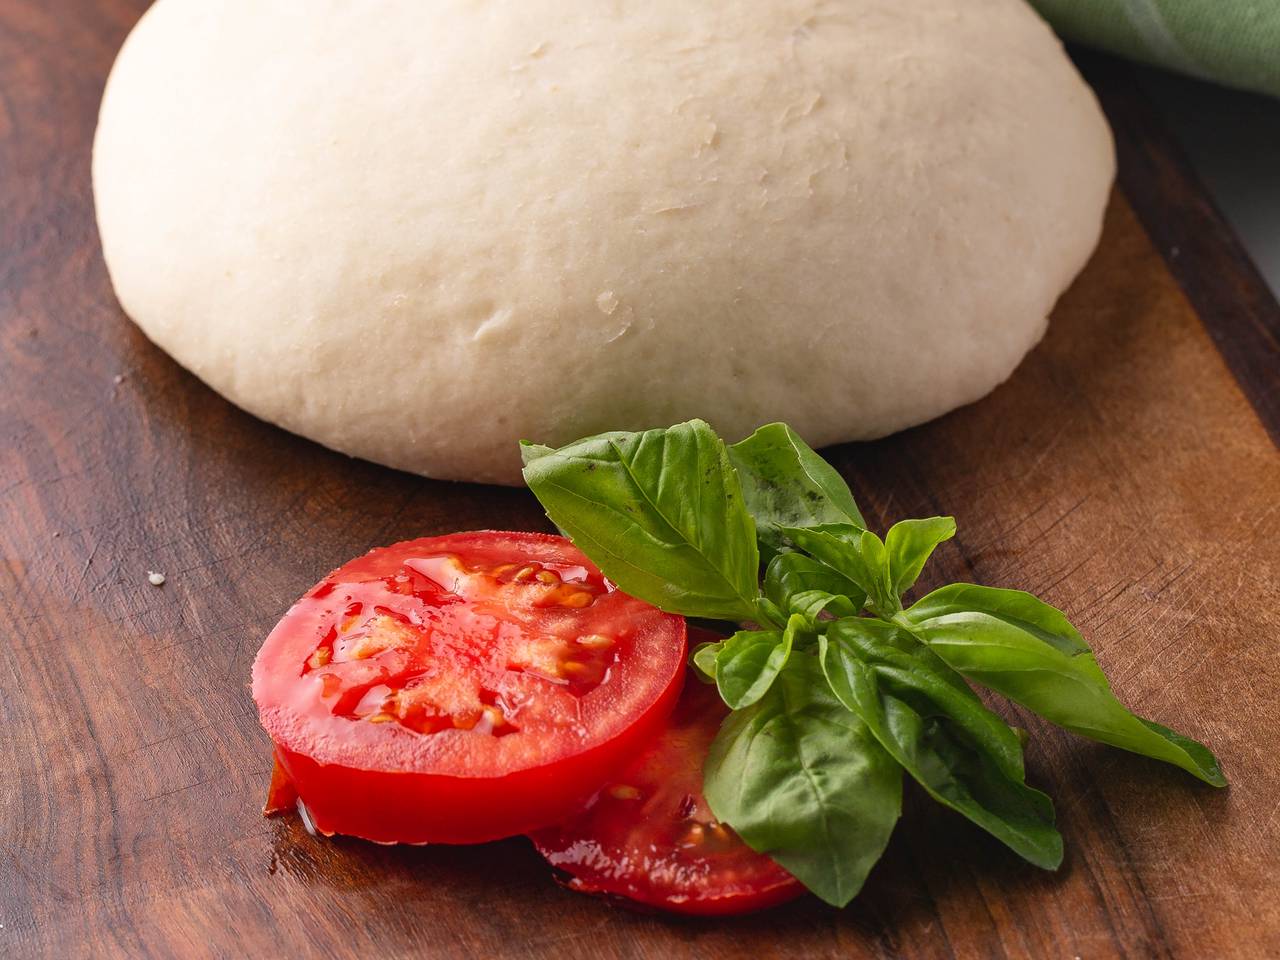 Easy and quick Italian pizza dough